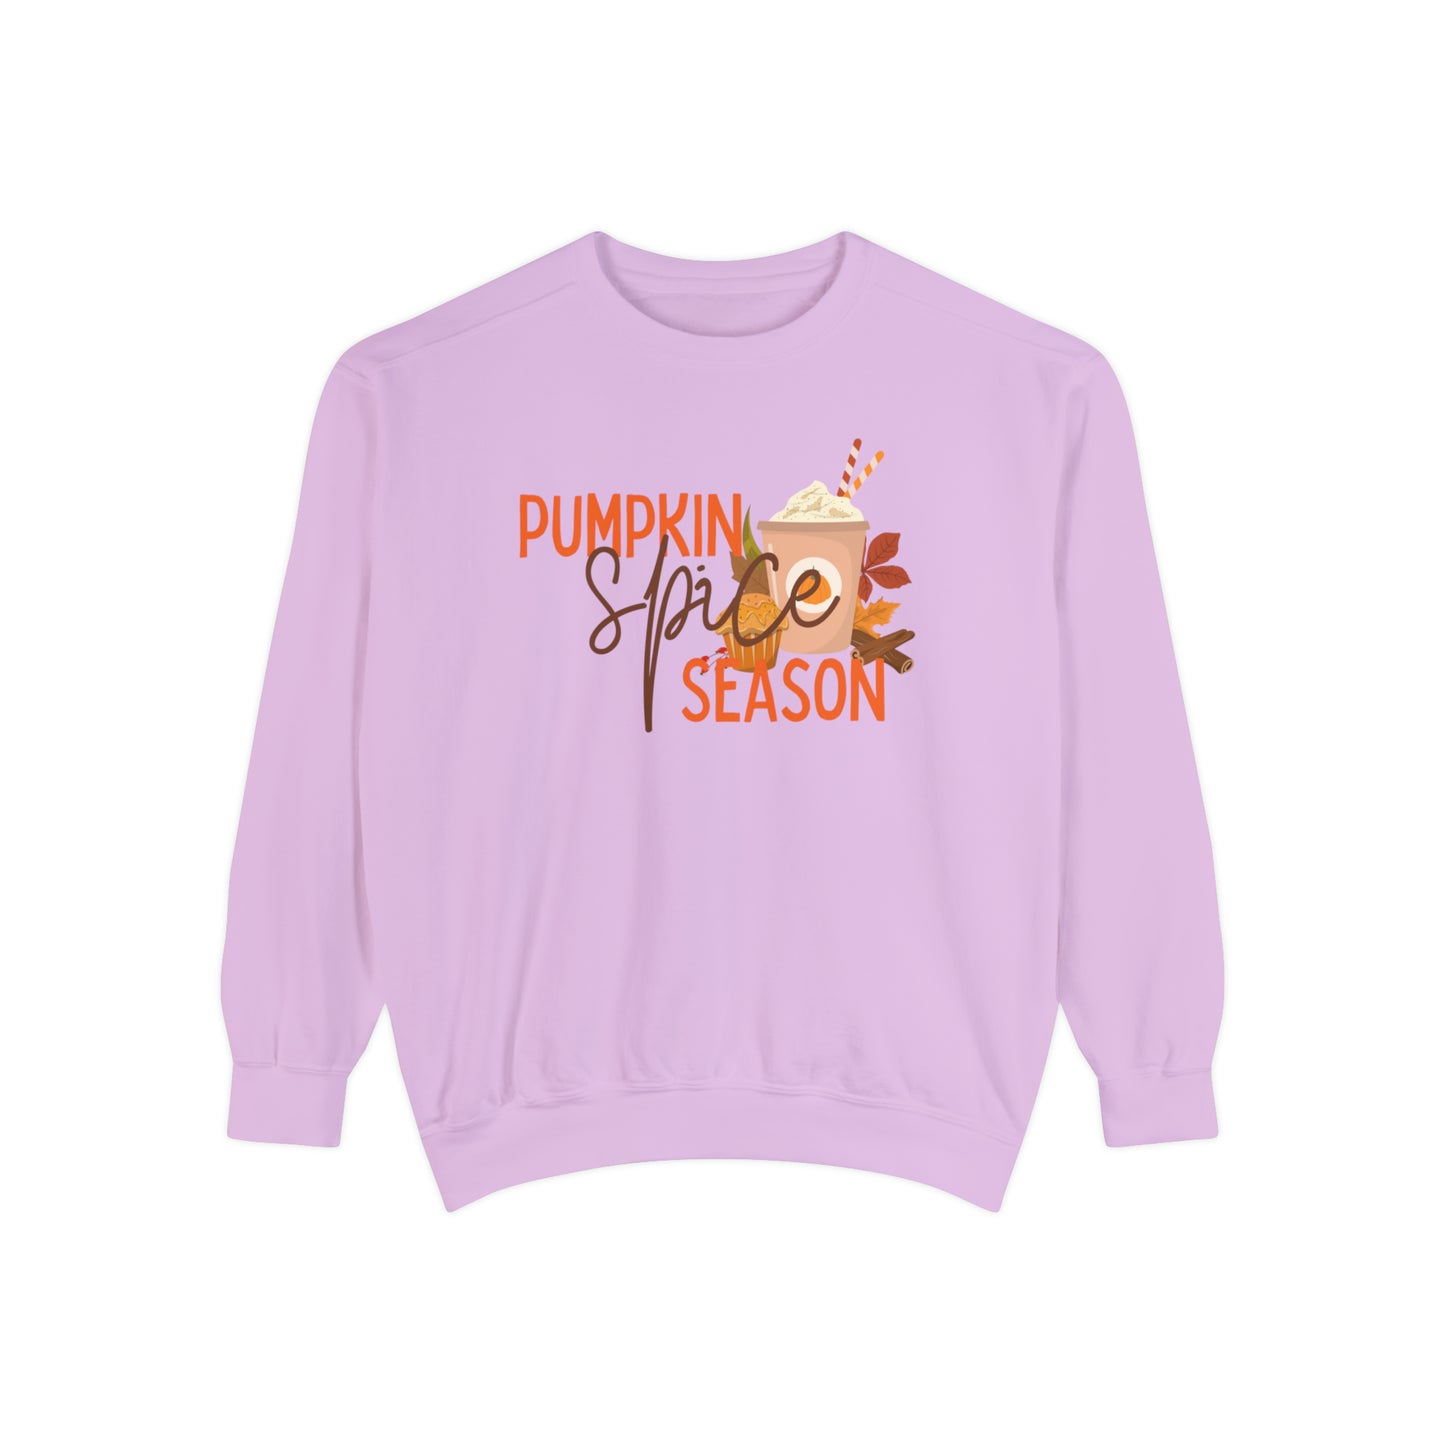 Pumpkin Spice Season sweatshirt